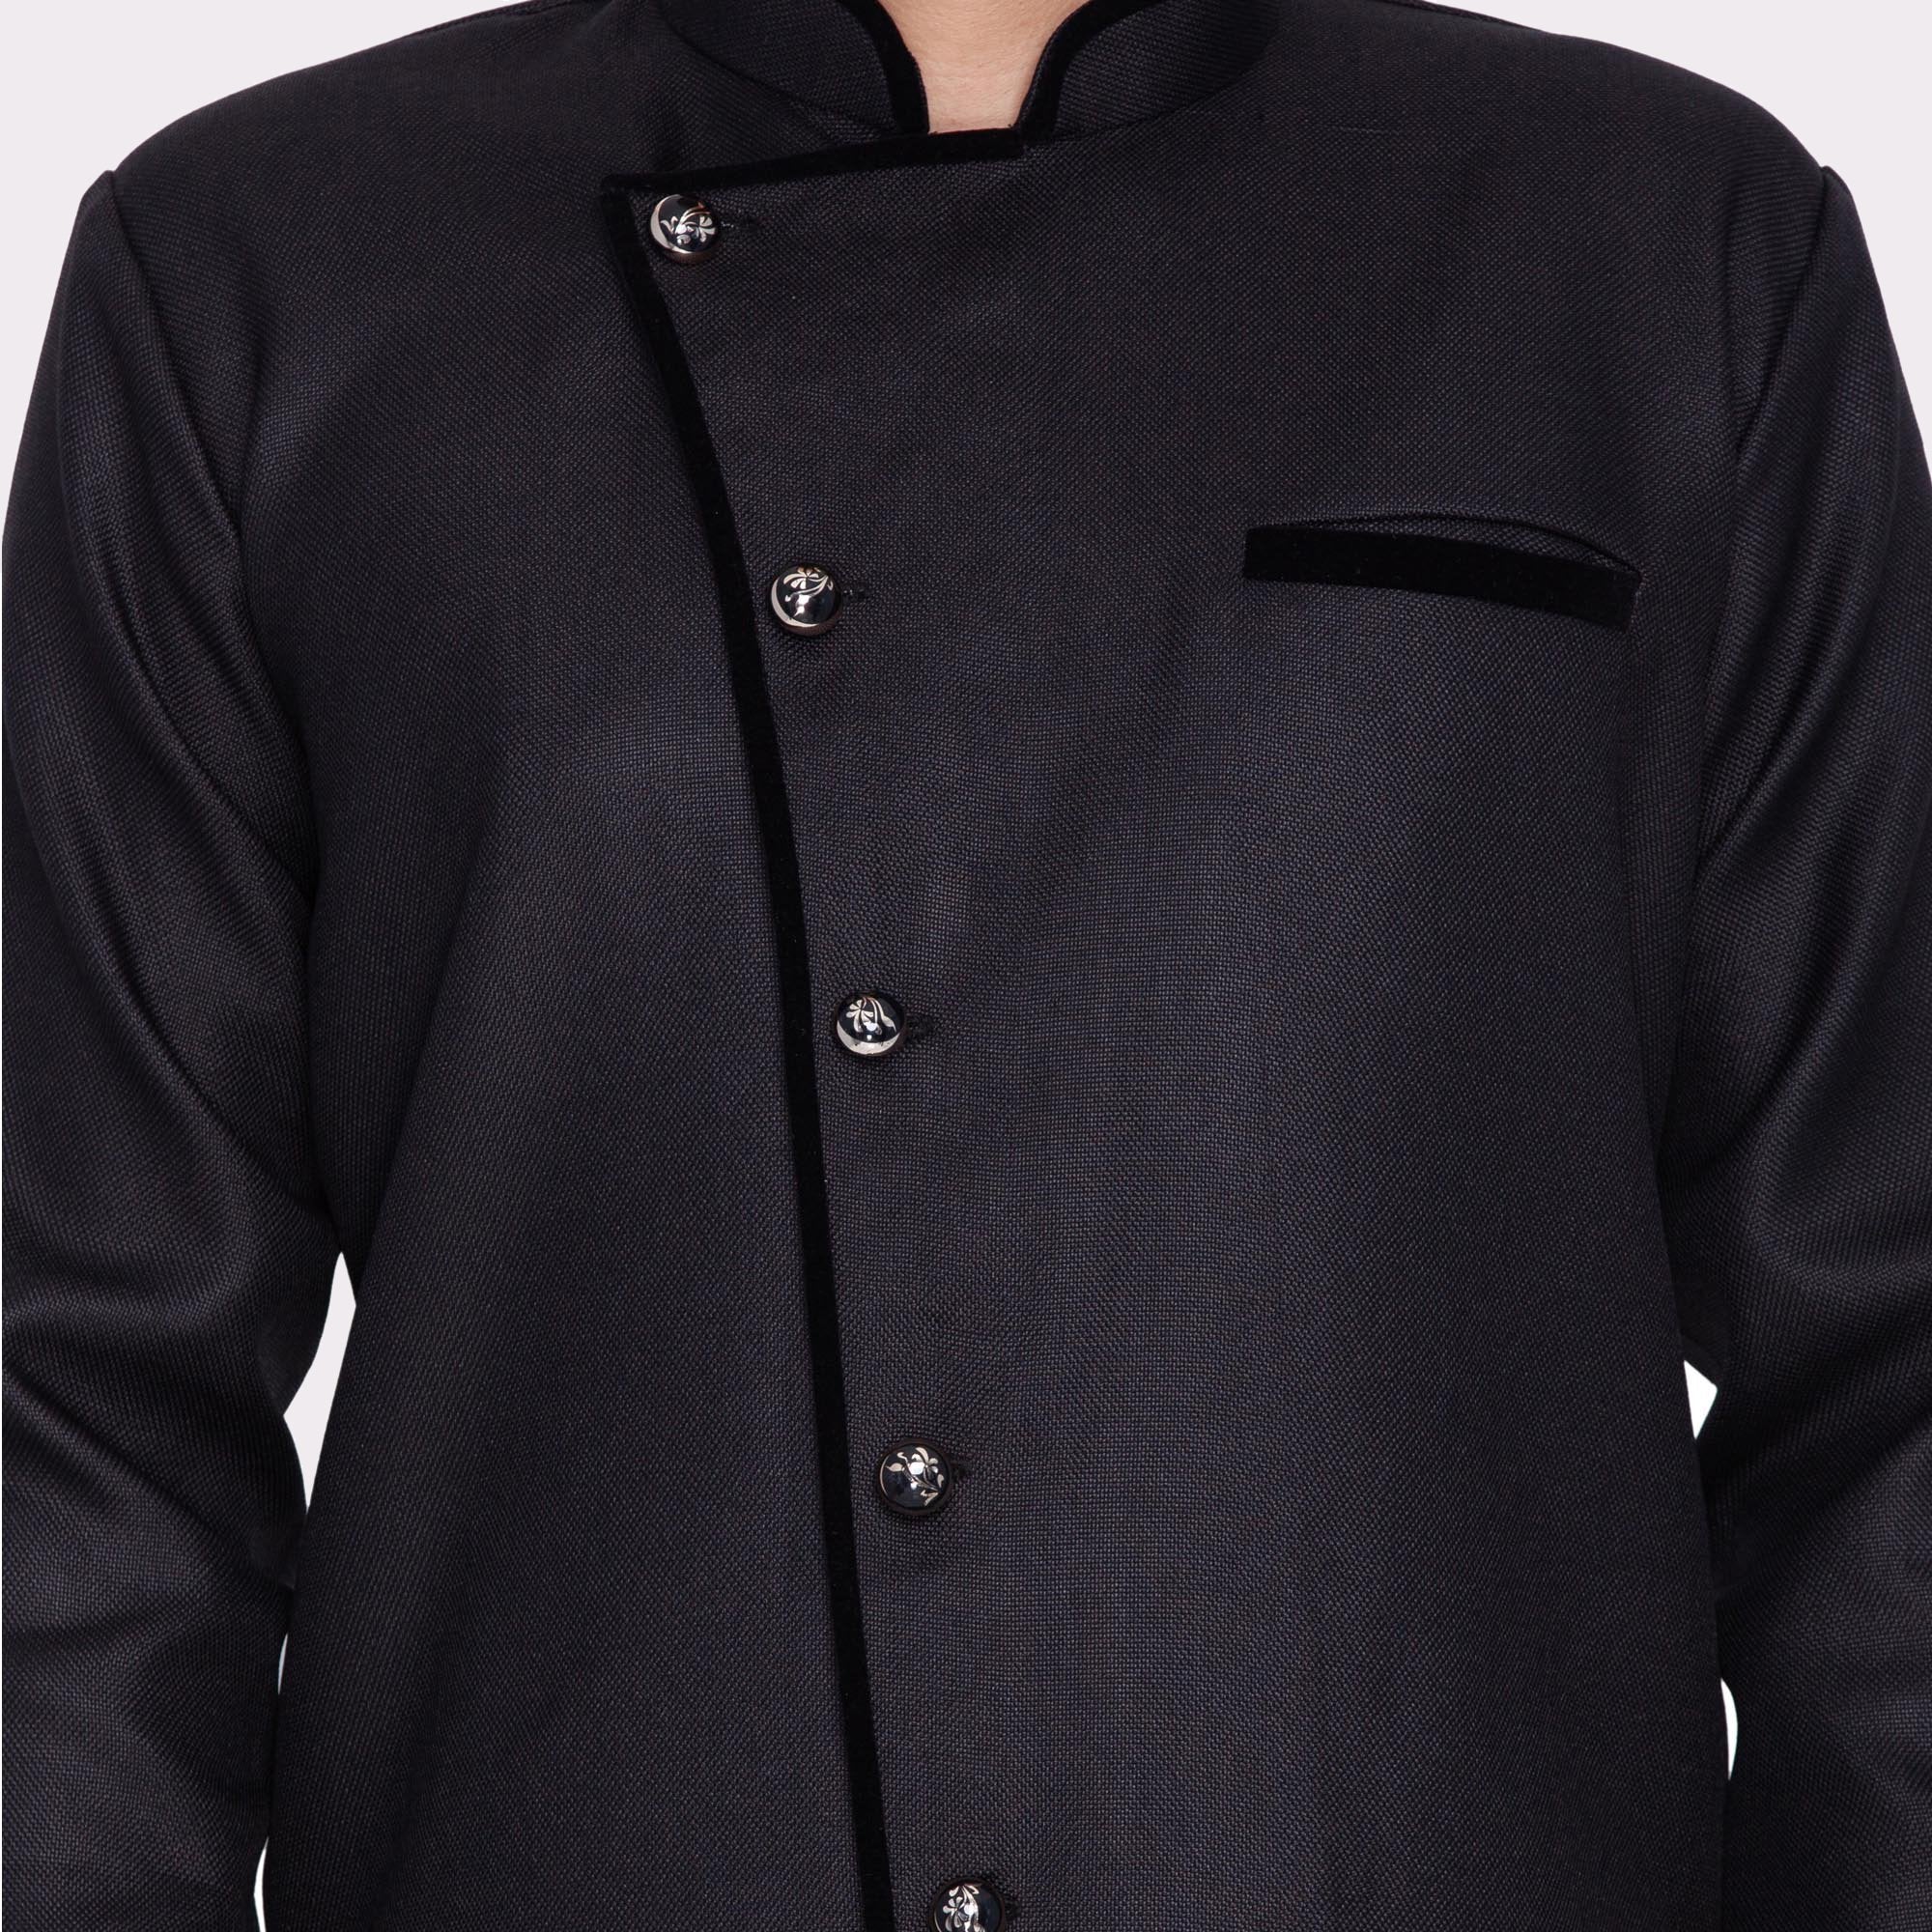 Men's Black Cotton Silk Blend Sherwani Only Top